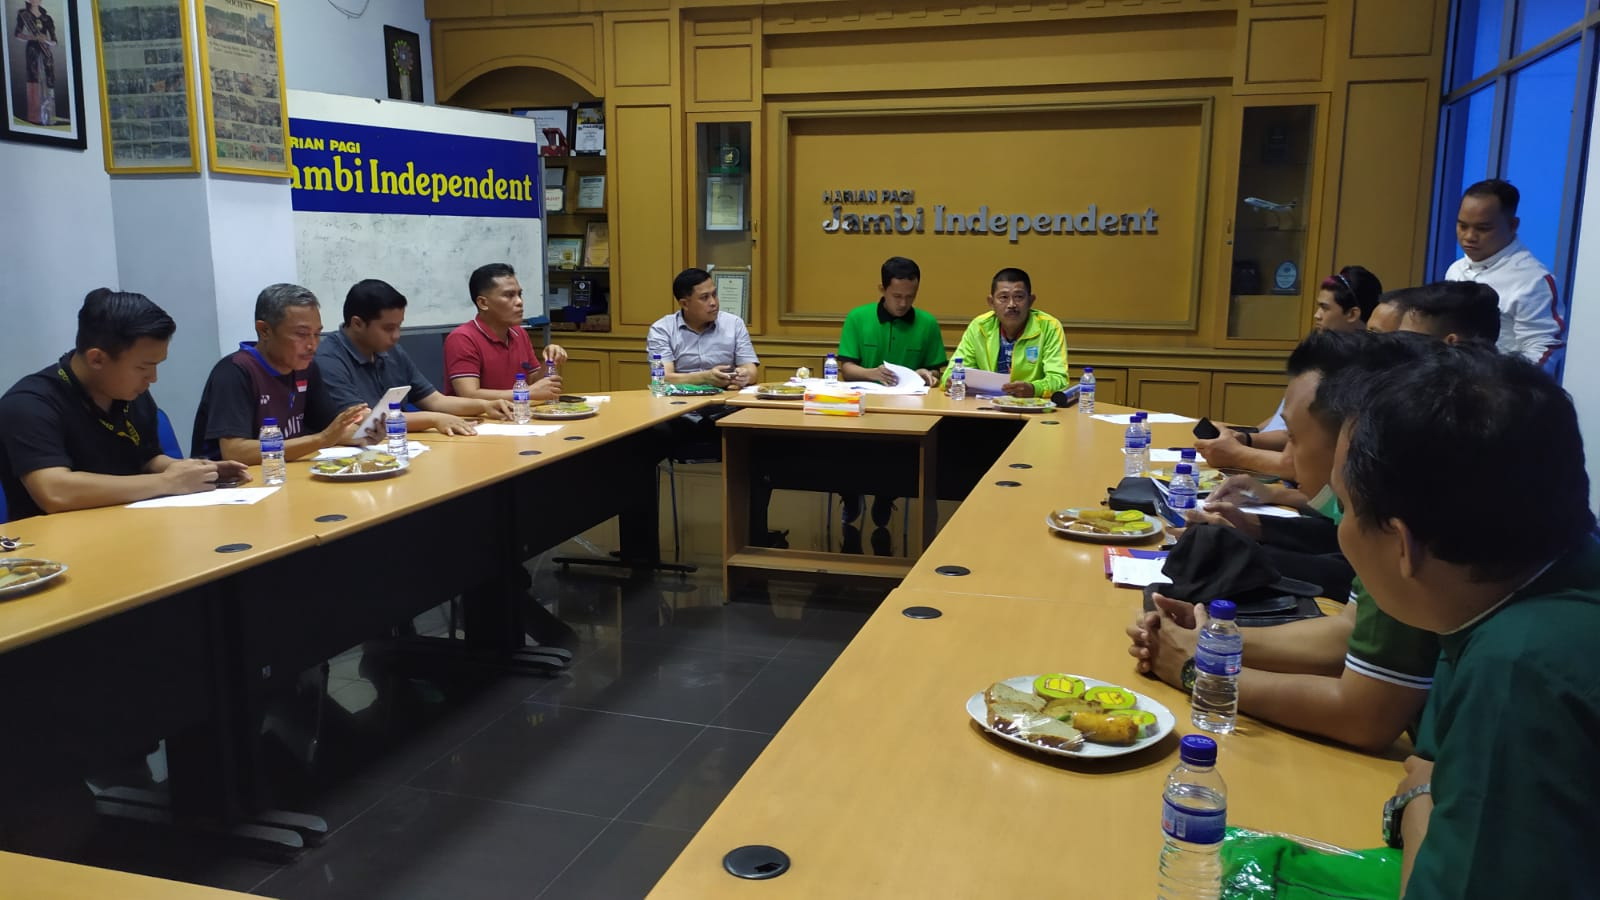 PB Kahmi Gelar Turnamen Badminton Bersama Harian Pagi Jambi Independent